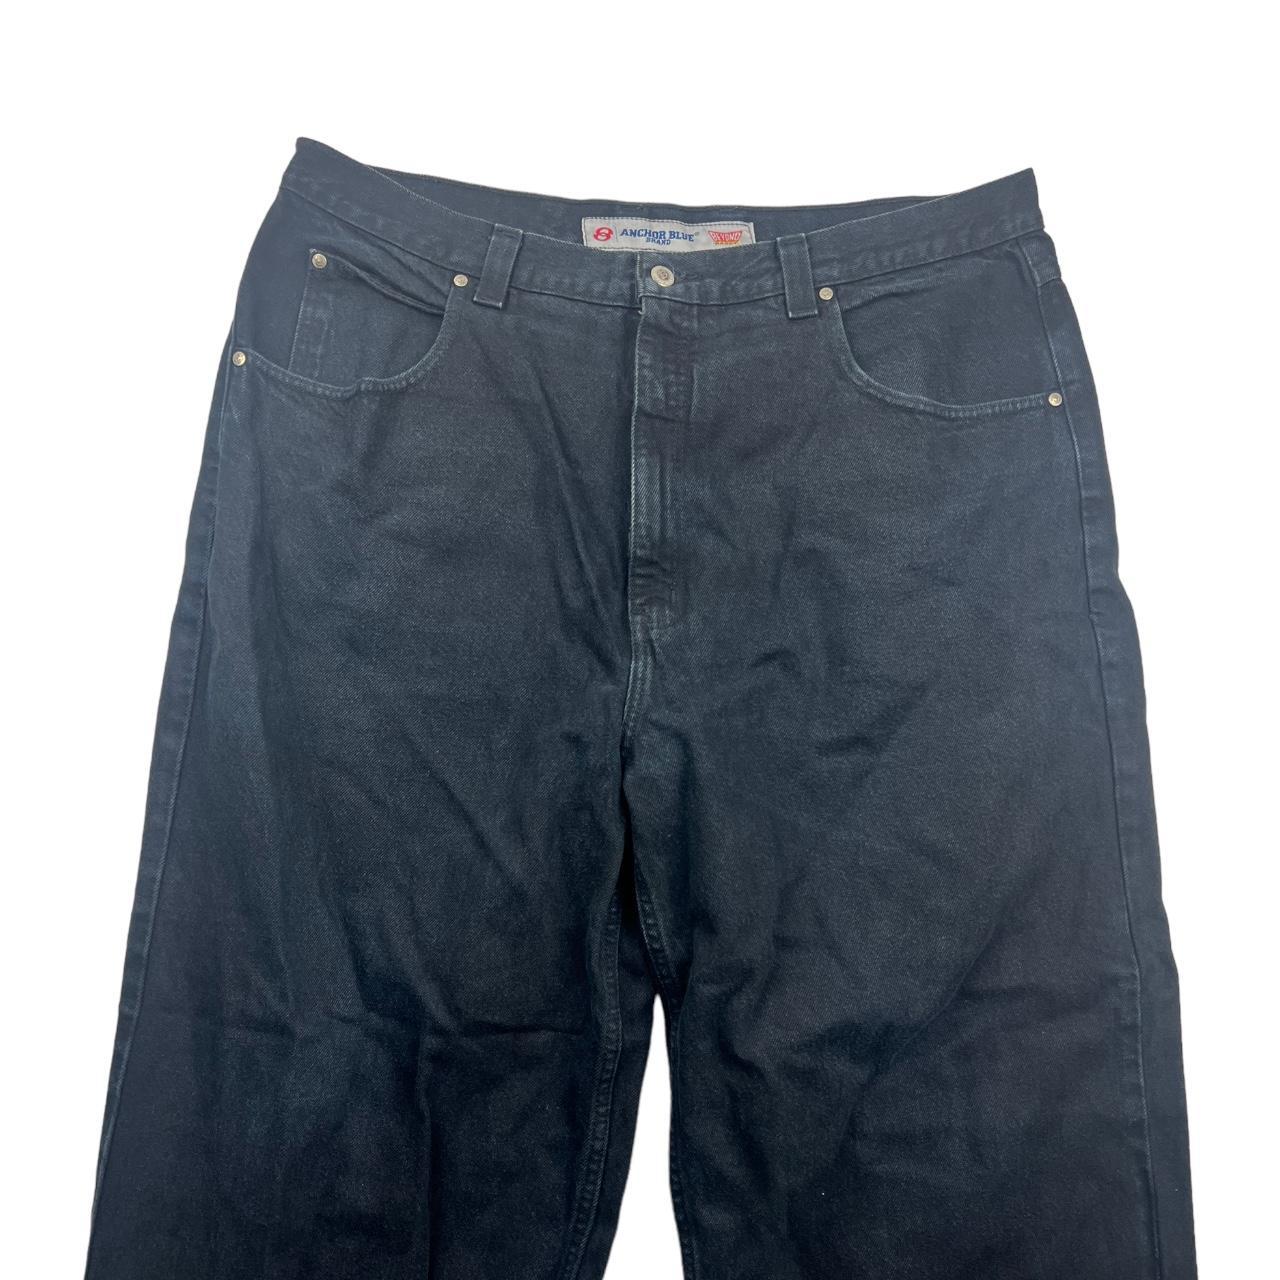 Anchor Blue Men's Navy Jeans (3)